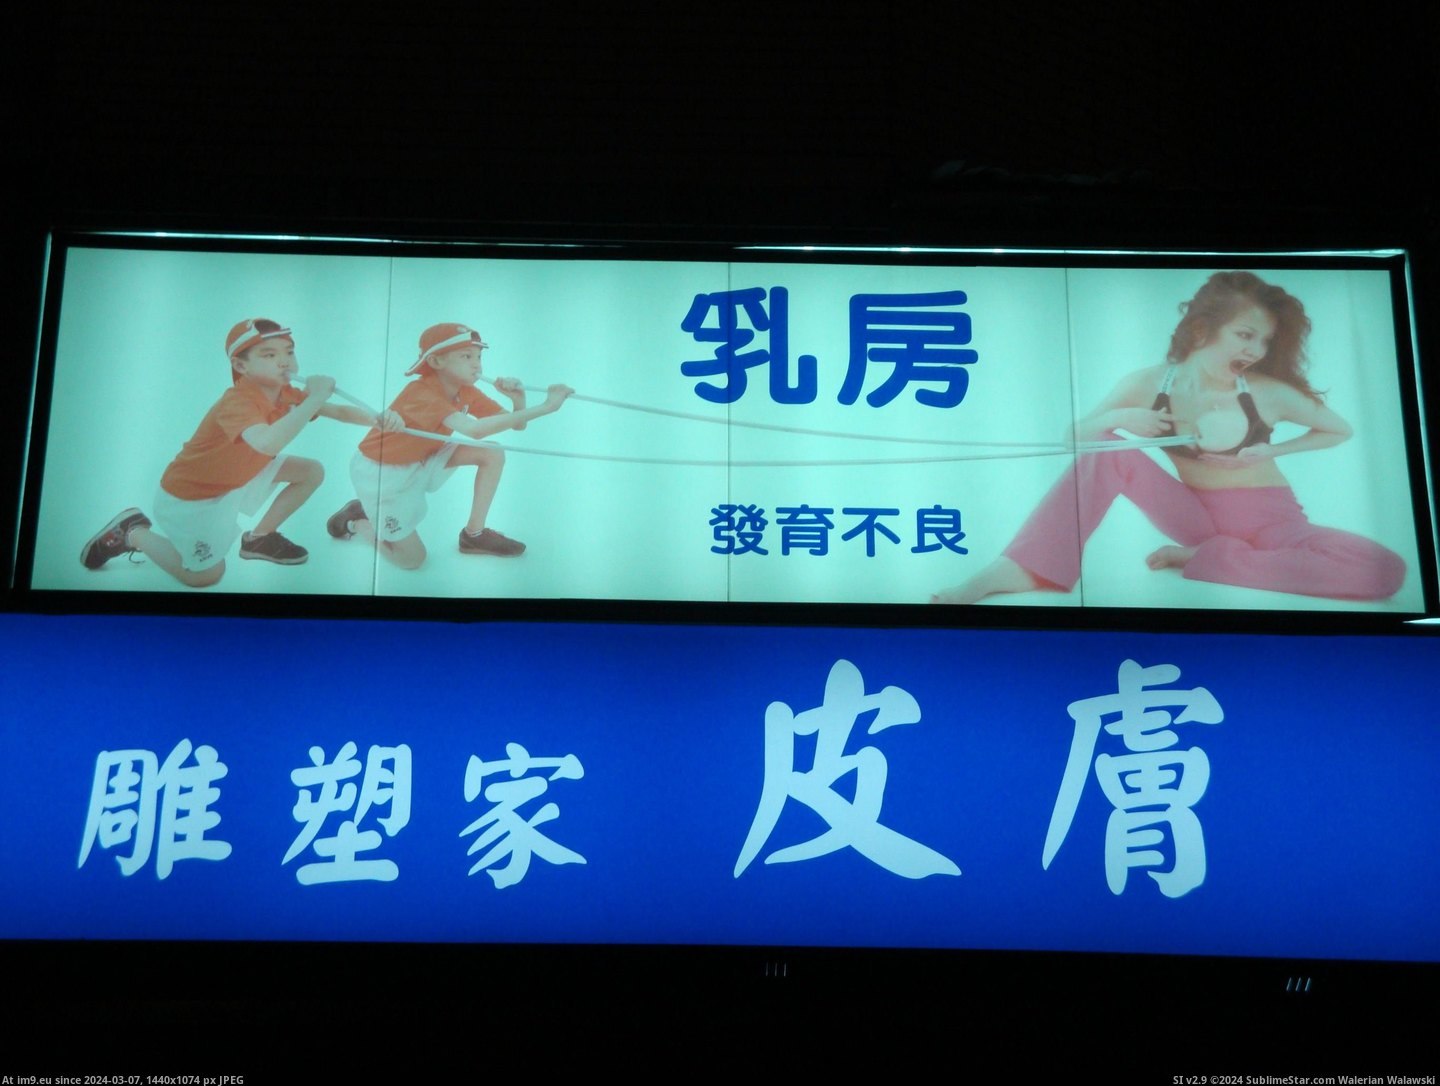 #Wtf #Liposuction #Vaguely #Taipei [Wtf] Taipei Liposuction Ad (vaguely NSFW) Pic. (Изображение из альбом My r/WTF favs))